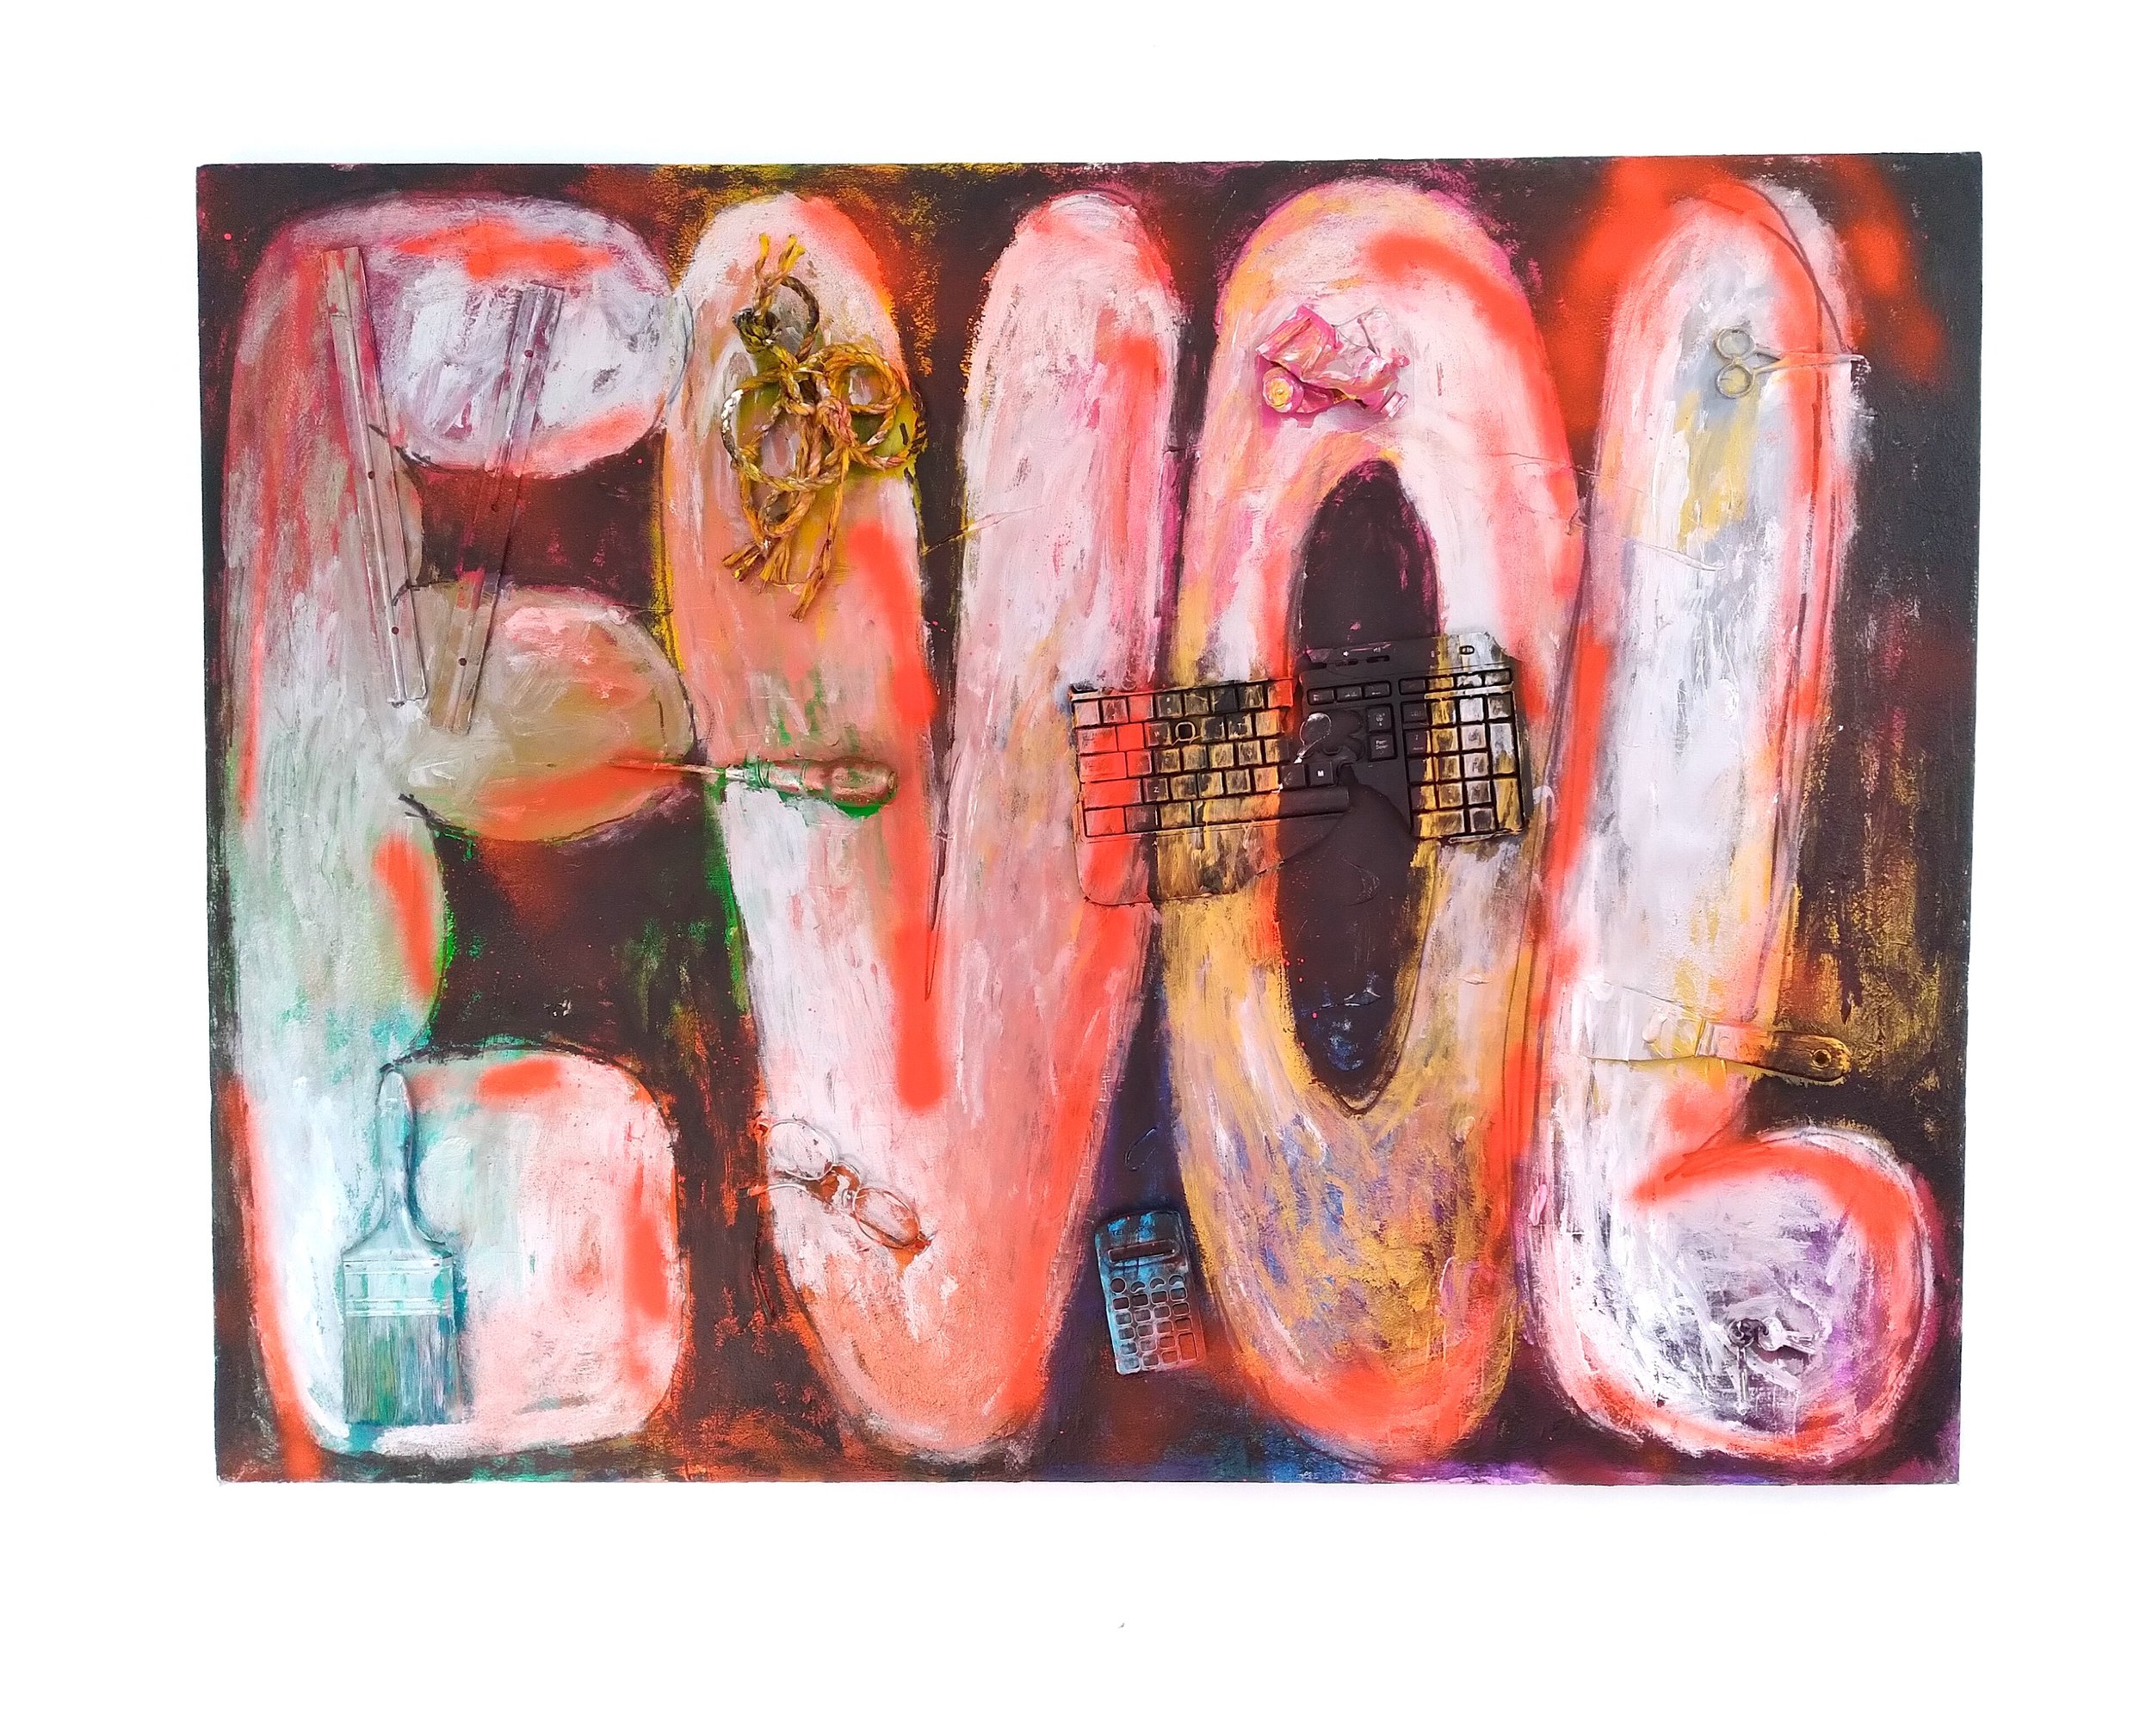 EVOL, 2014. Oil, acrylic, mixed media on canvas. 36” x 50”.